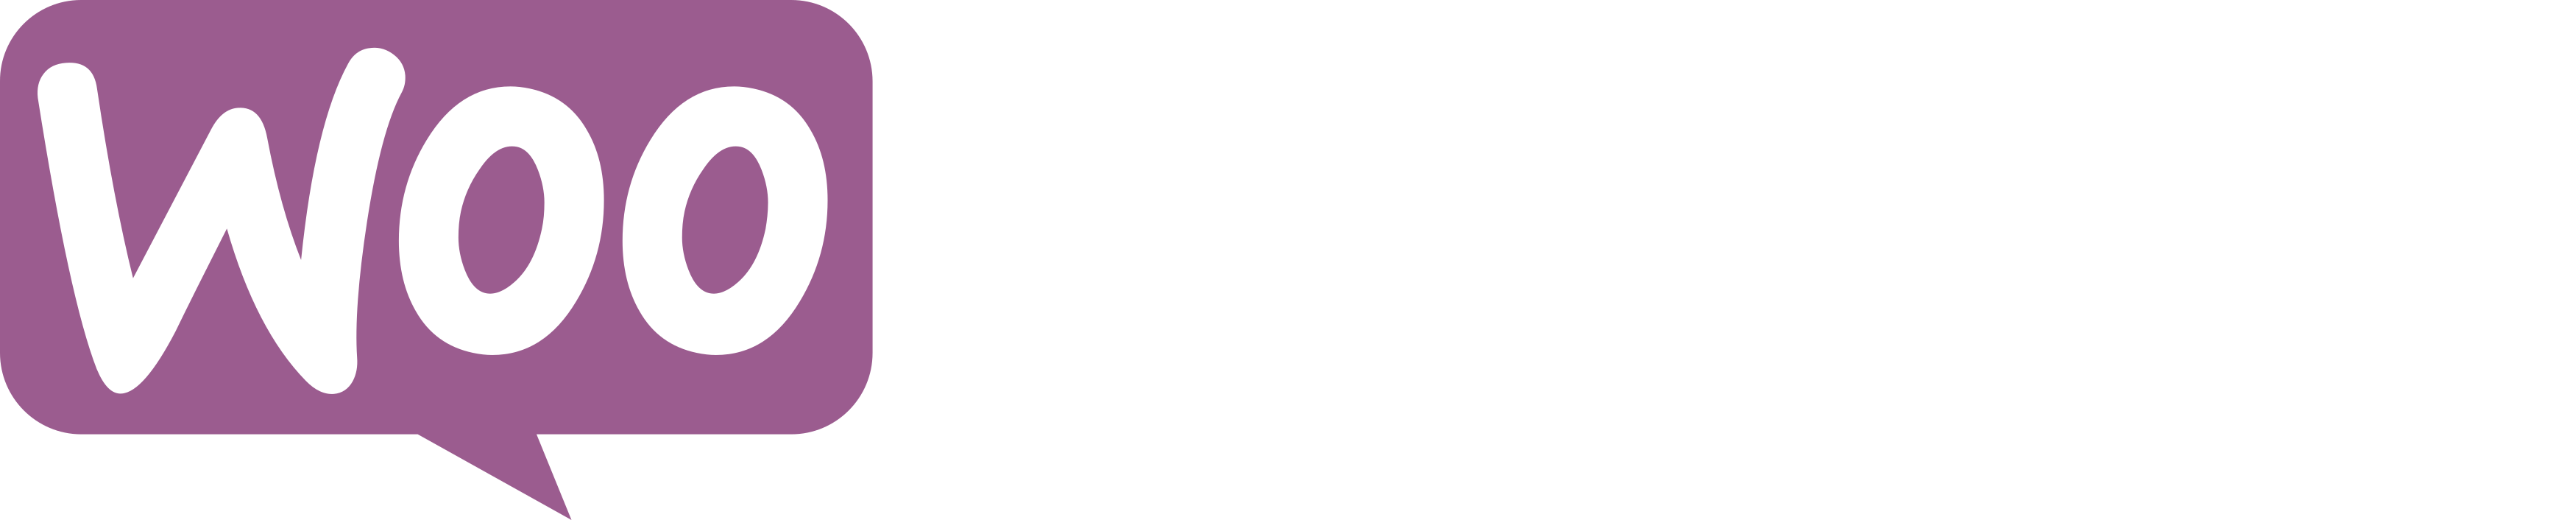 WooCommerce logo.